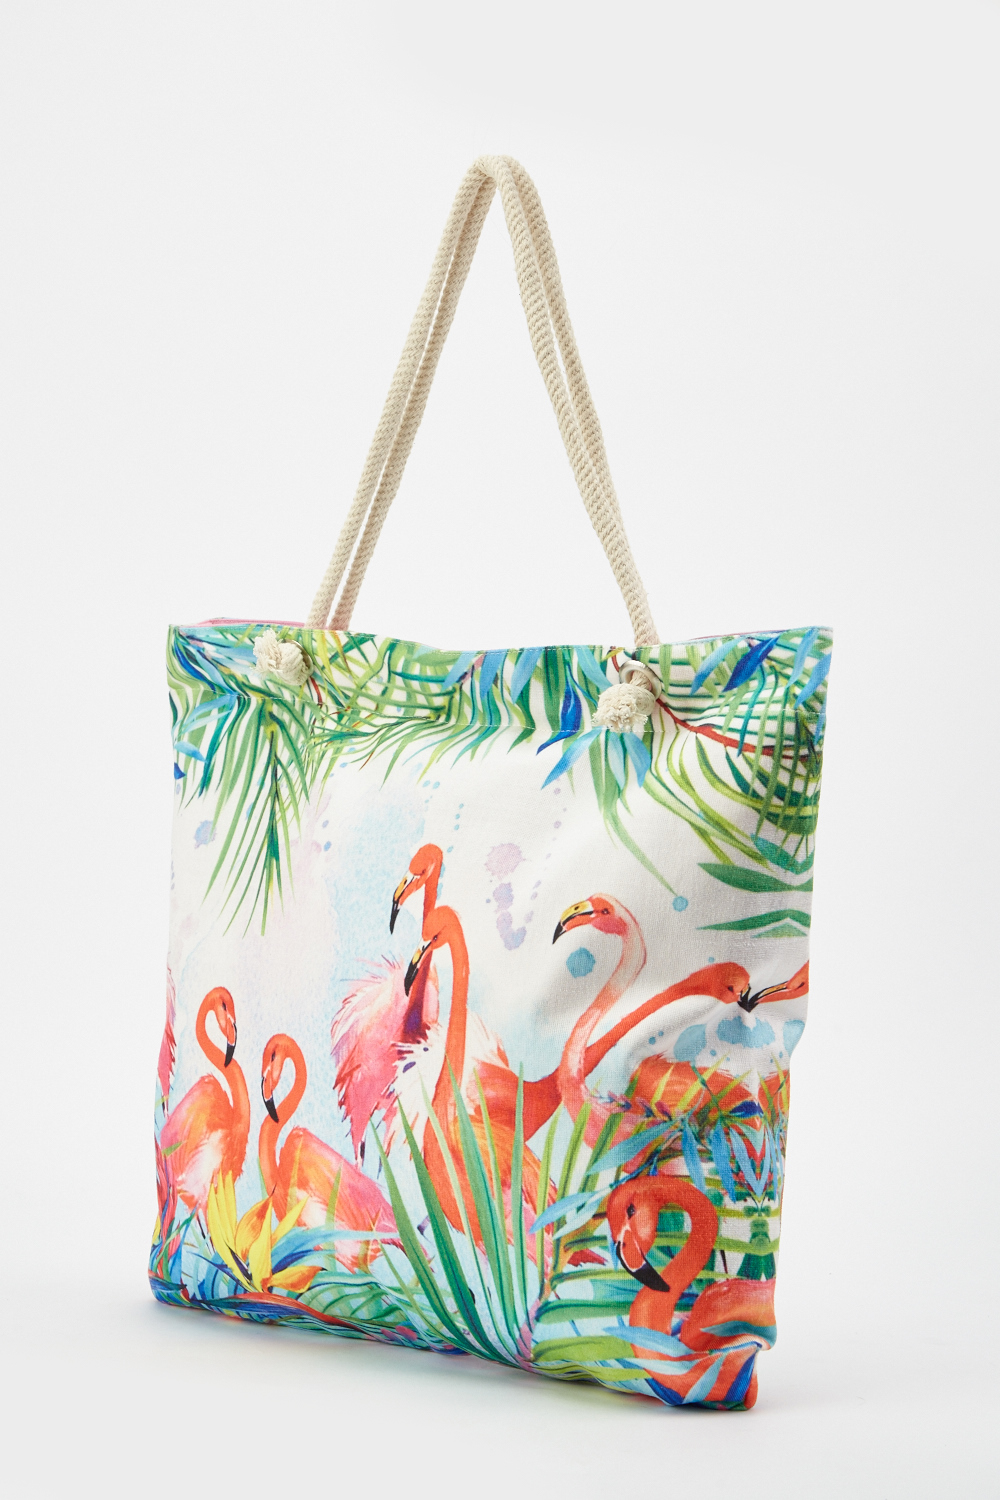 Flamingo Tropical Beach Bag - Just $7